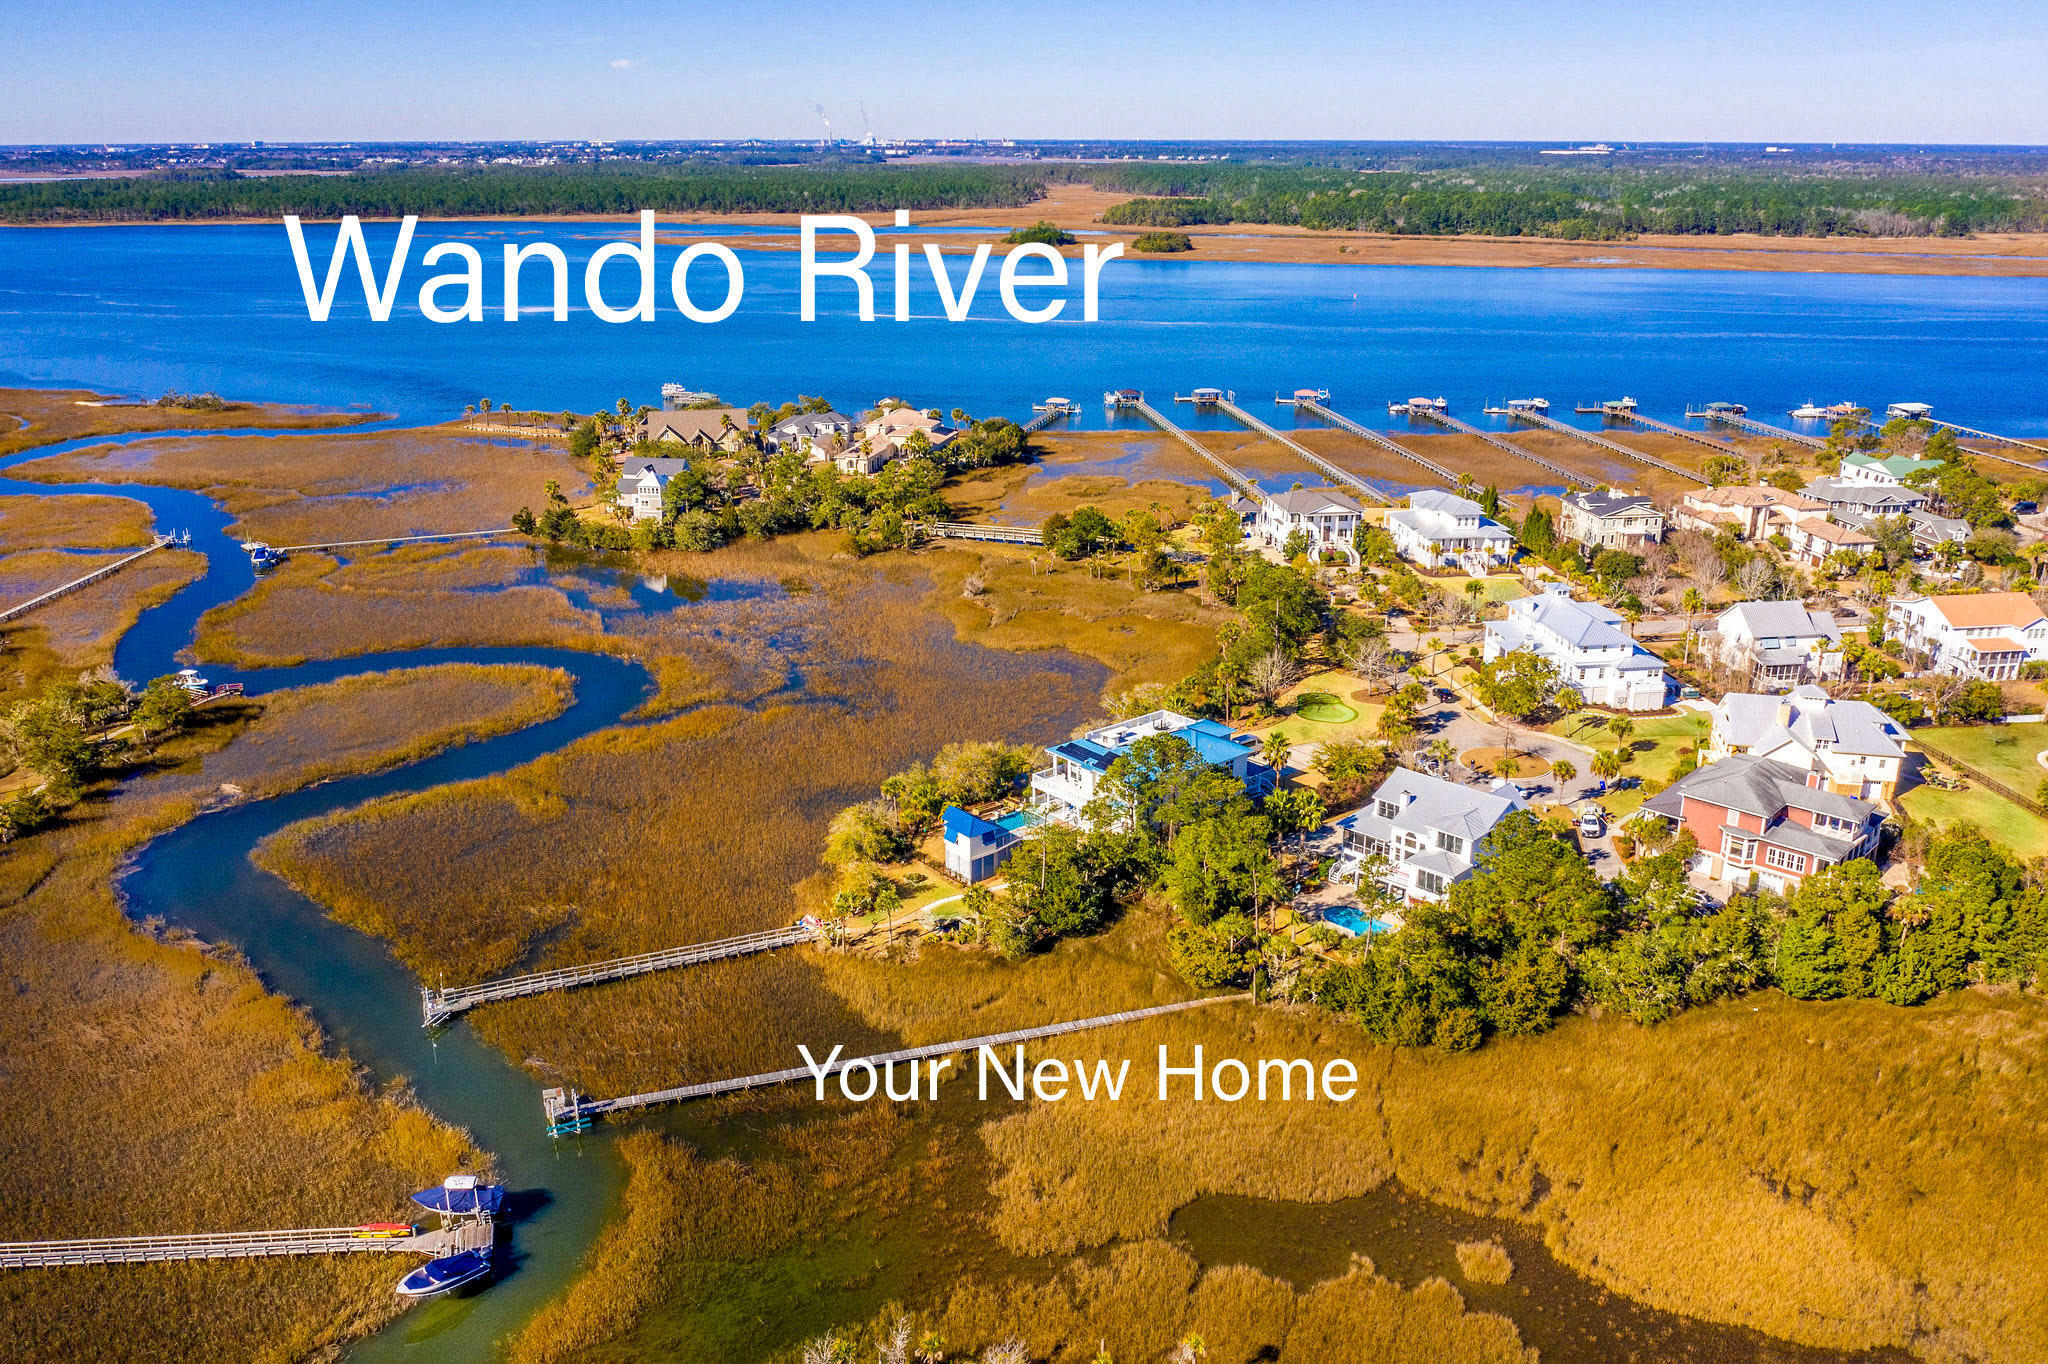 Wando River